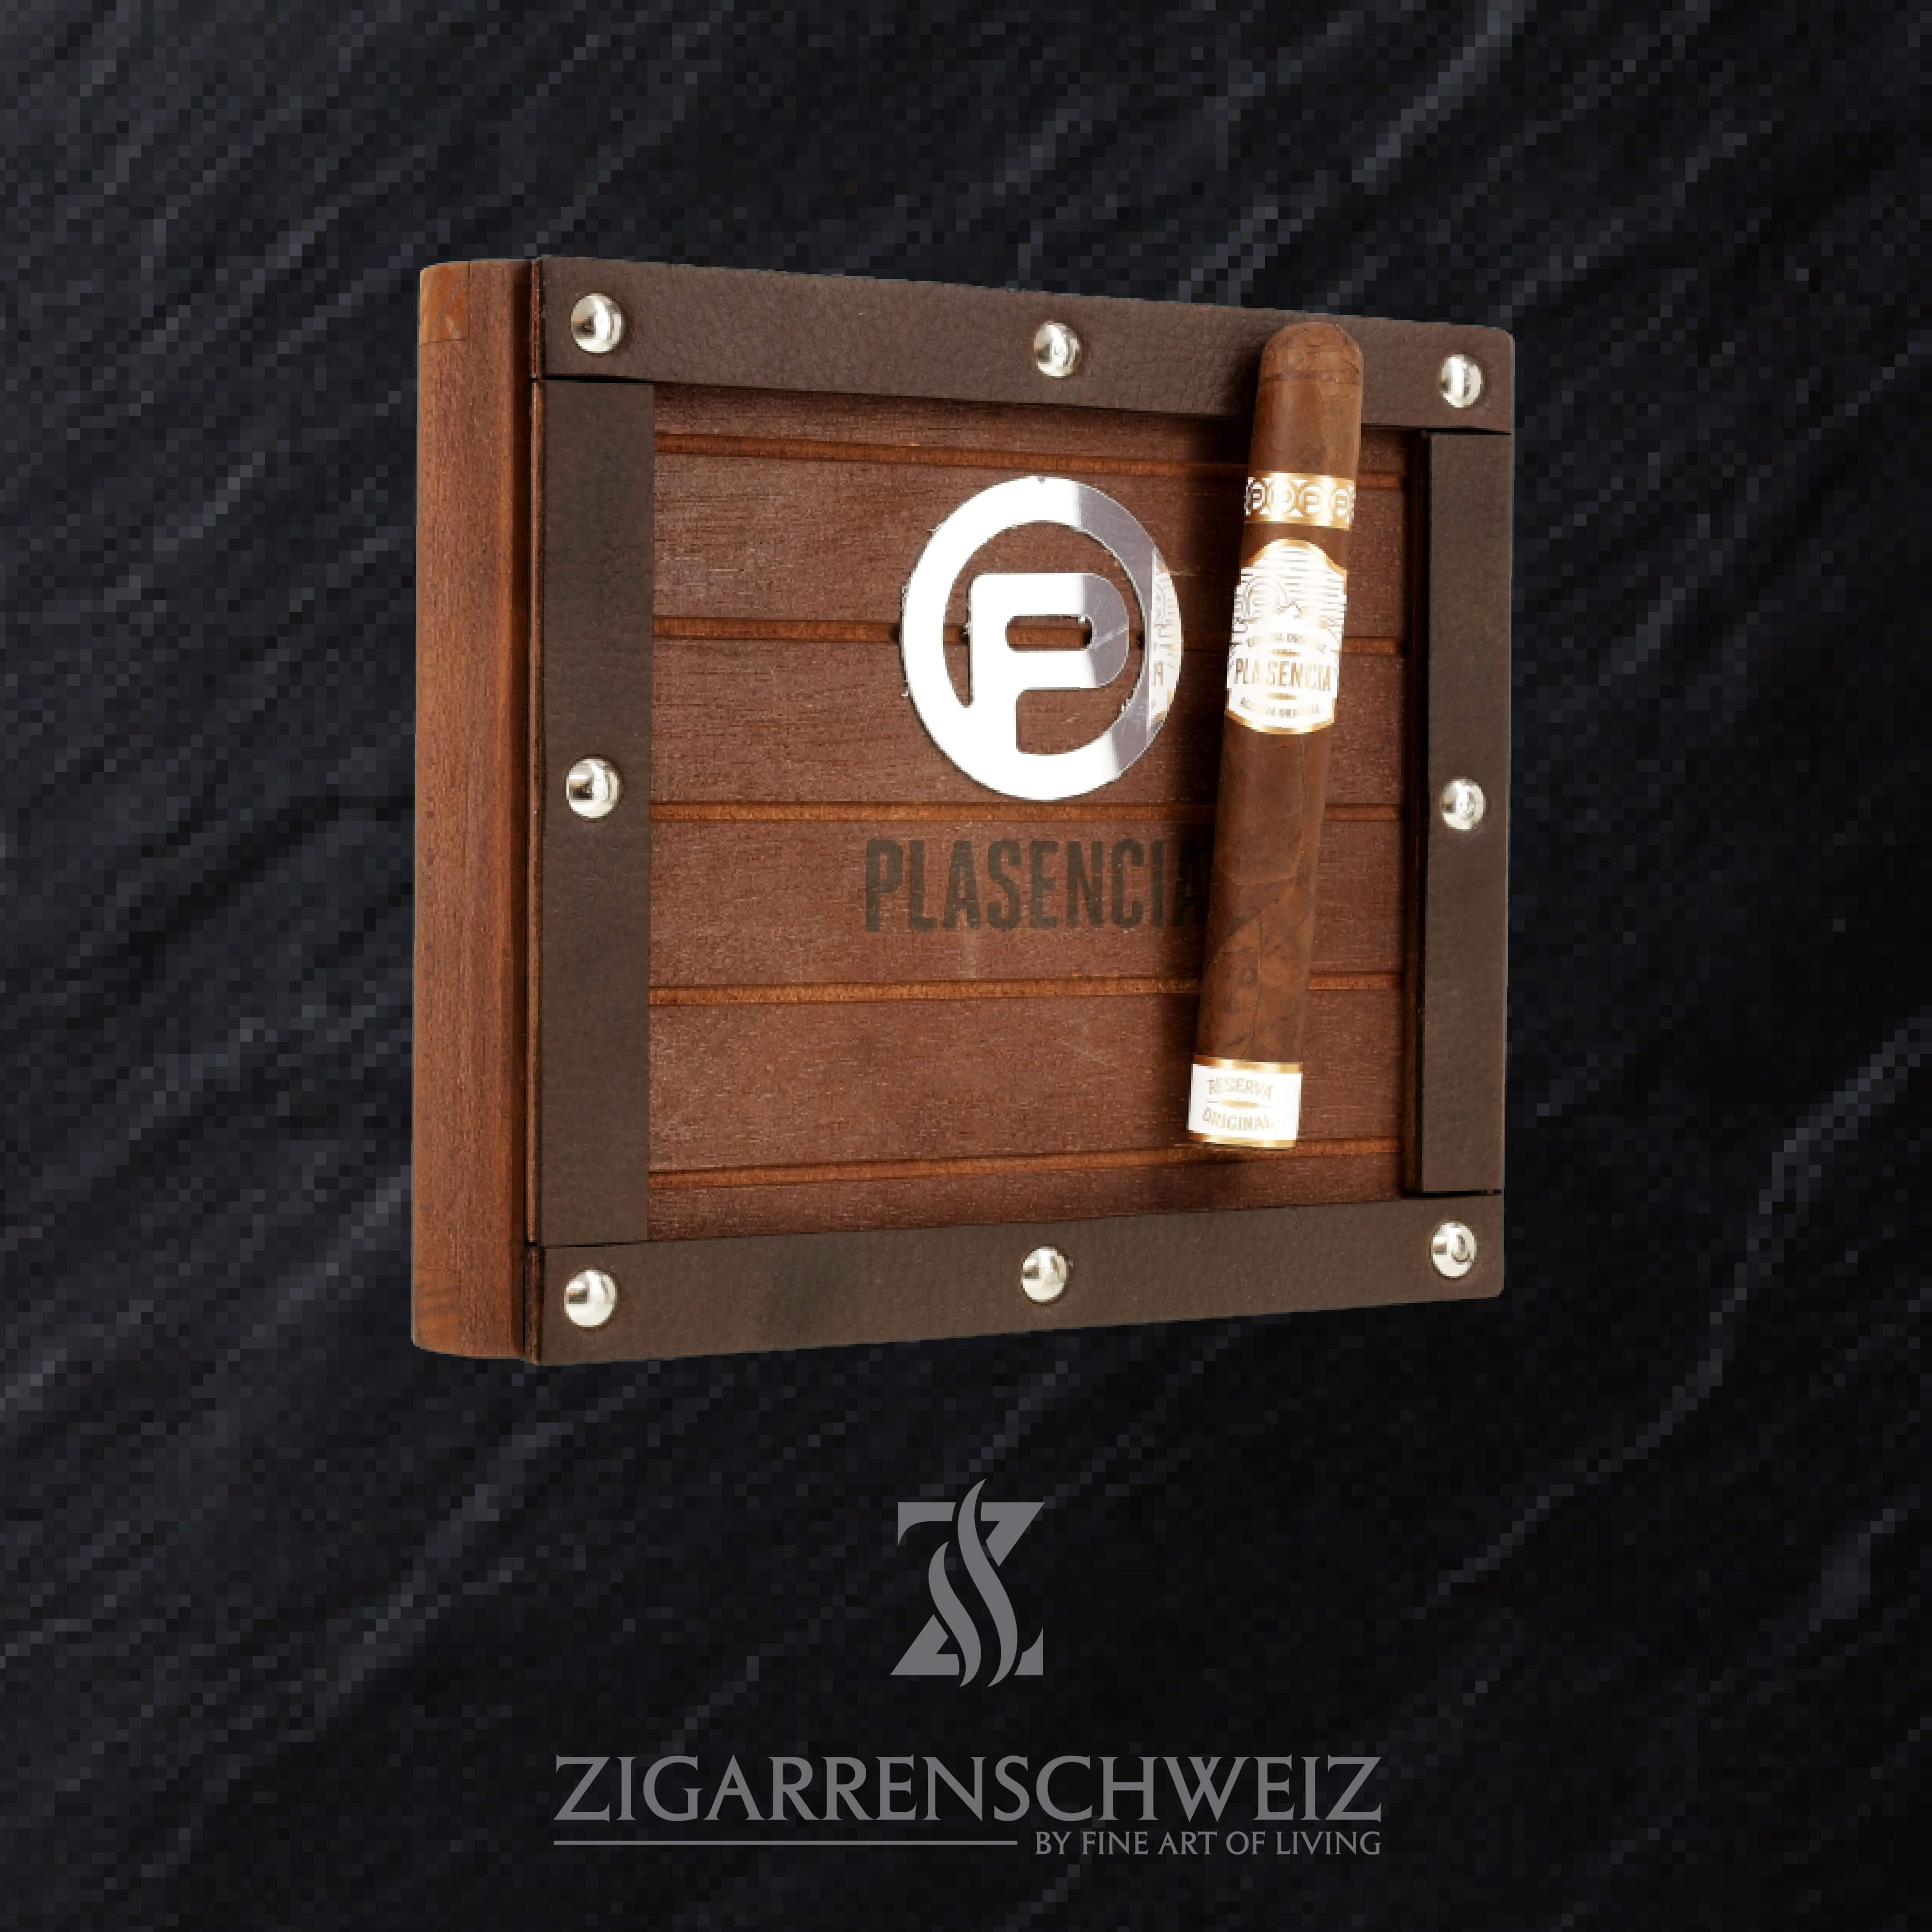 Plasencia Reserva Original Toro Zigarren Kiste geschlossen